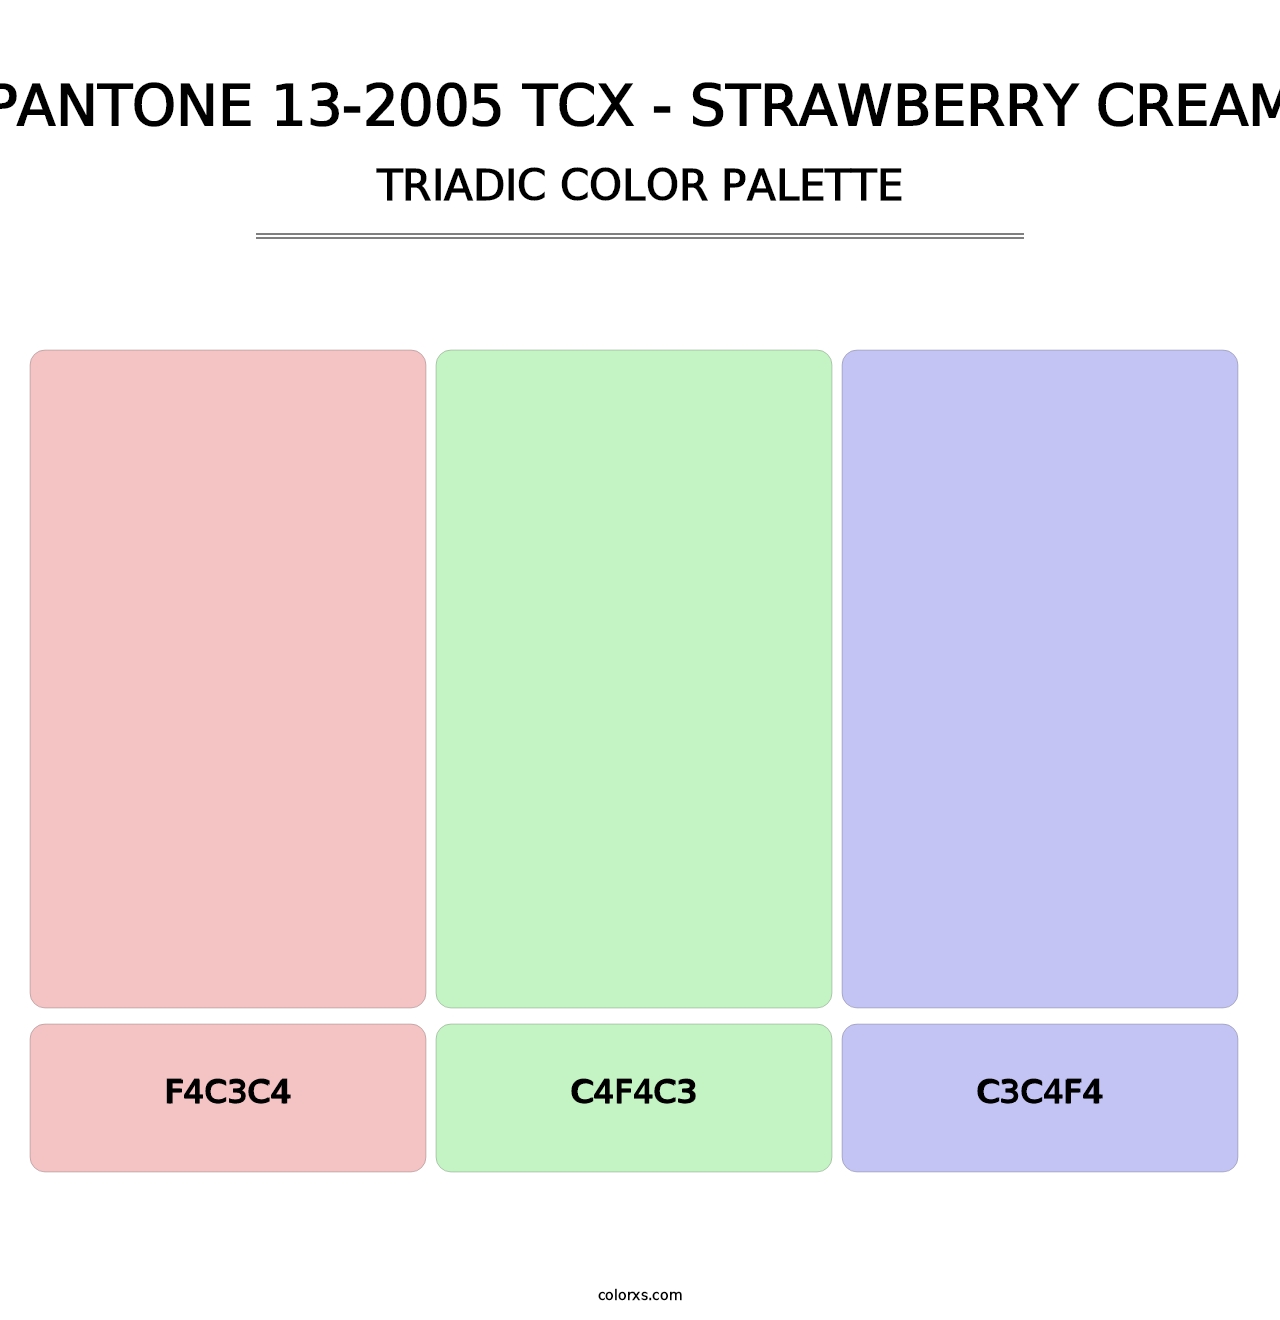 PANTONE 13-2005 TCX - Strawberry Cream - Triadic Color Palette